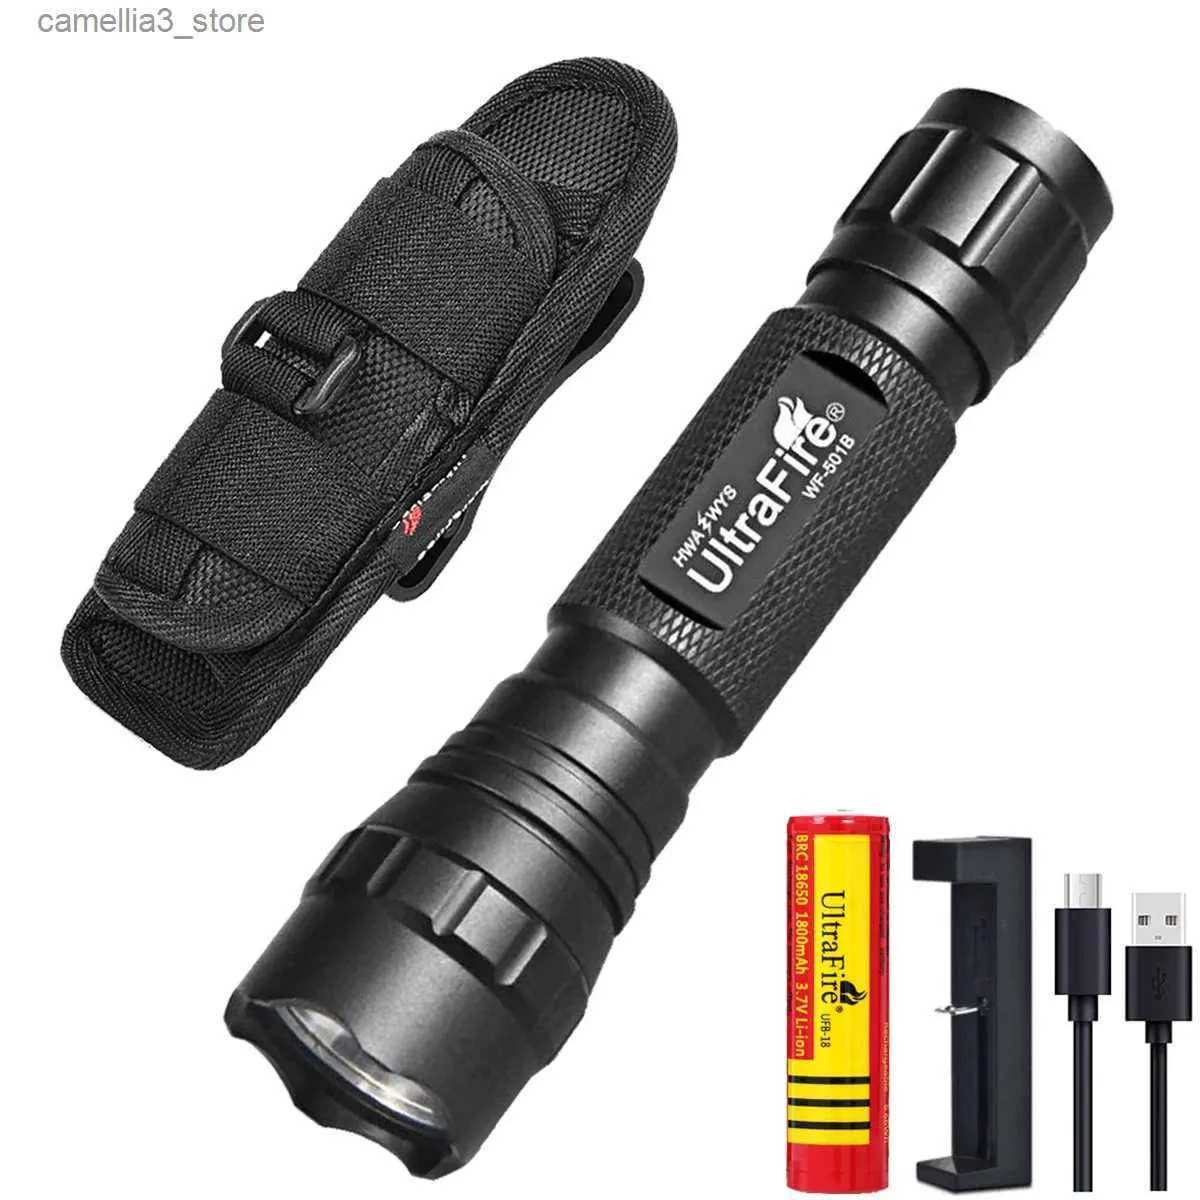 Фонари UltraFire LED Tactical 18650 501B Однорежимный фонарик 1200 люмен с чехлом для ремня безопасности Перезаряжаемая батарея и зарядное устройство Q231130